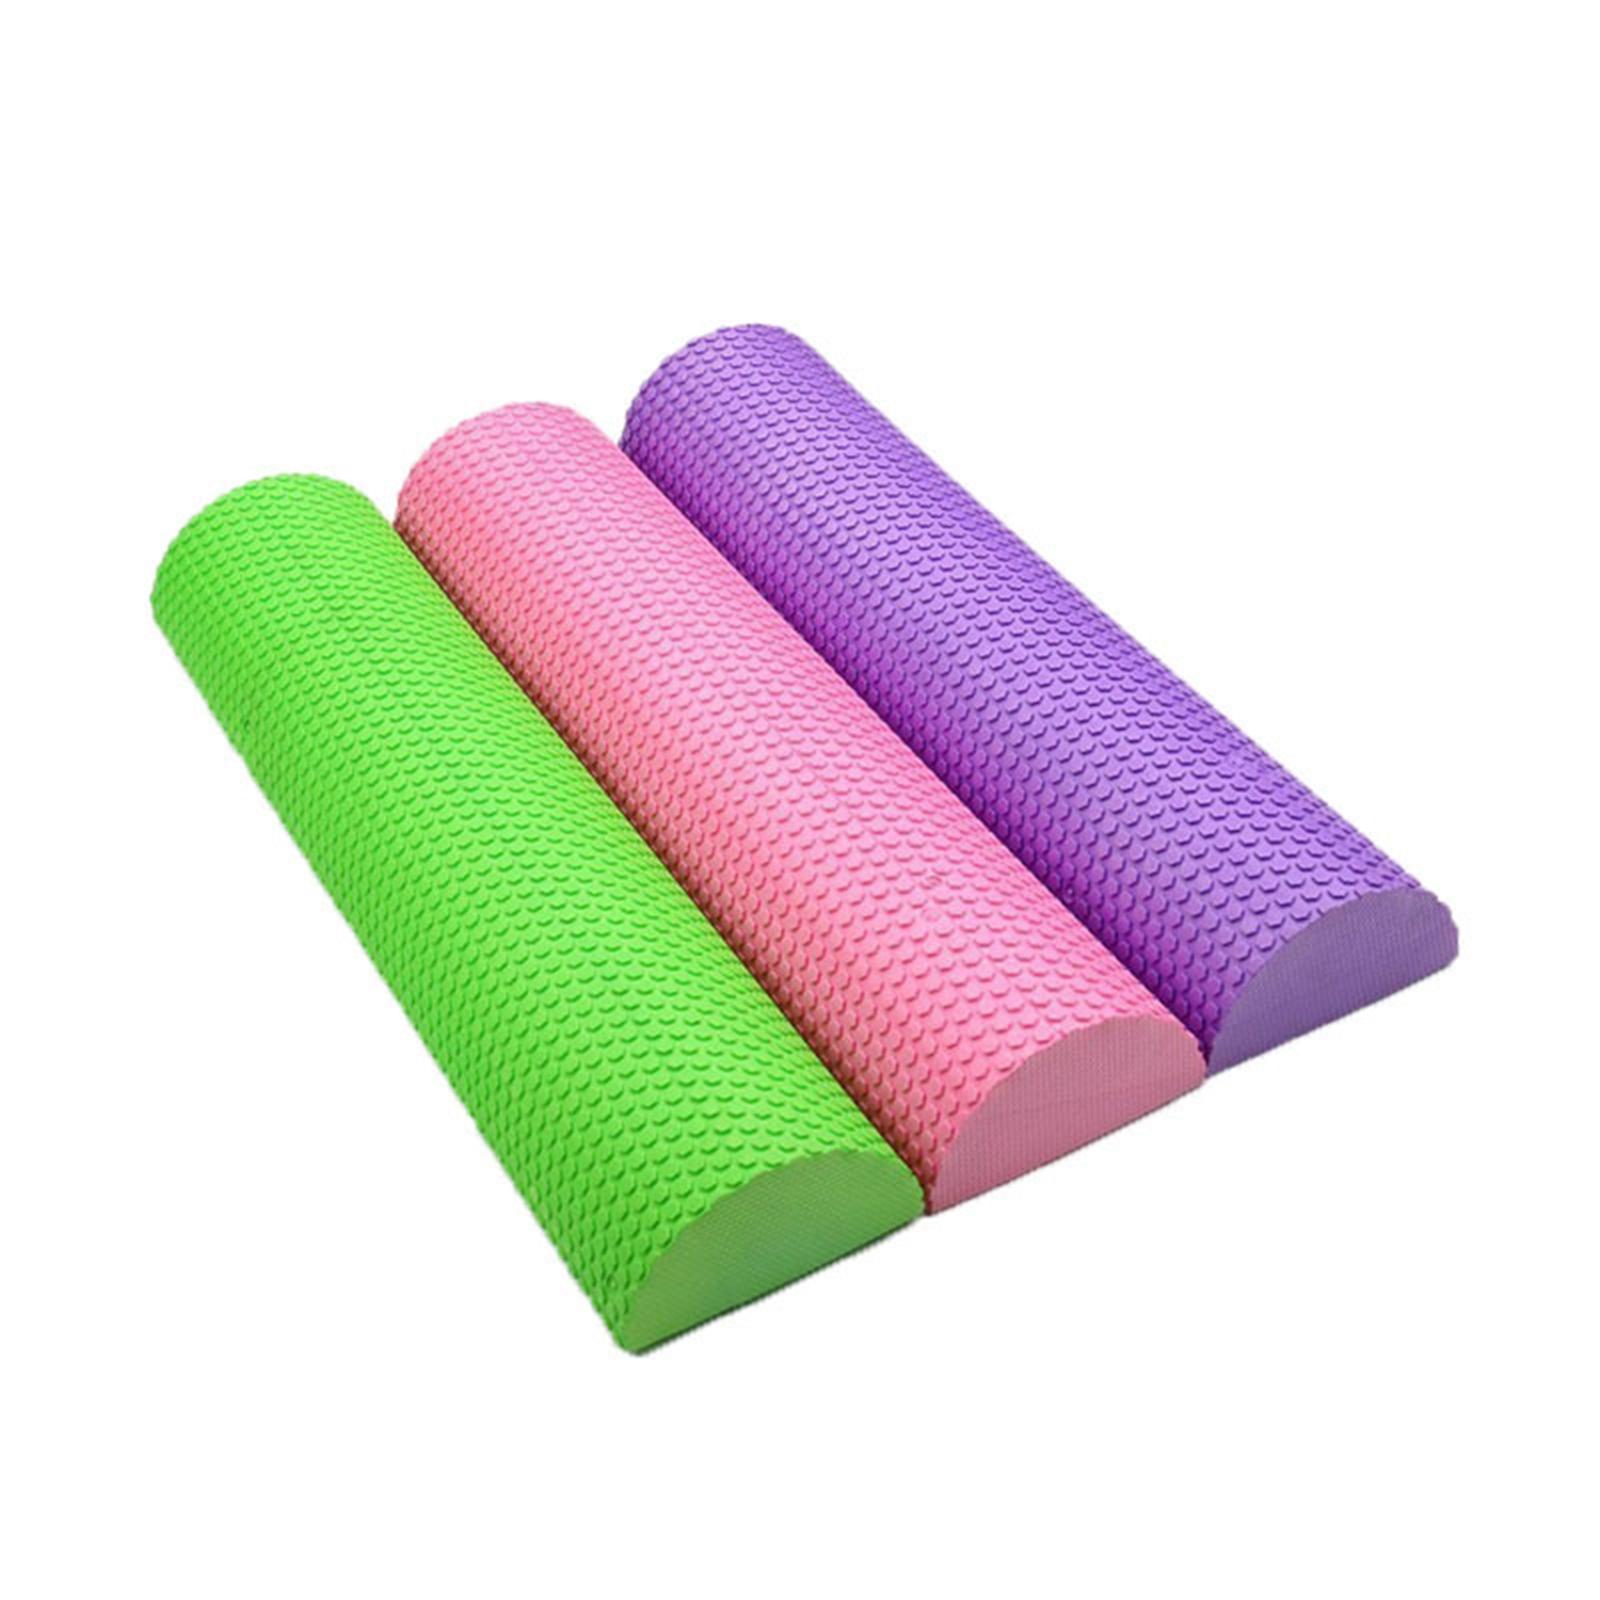 Foam Roller Half Round Massage Yoga Pilates Fitness Balance Yoga Bule 45cm